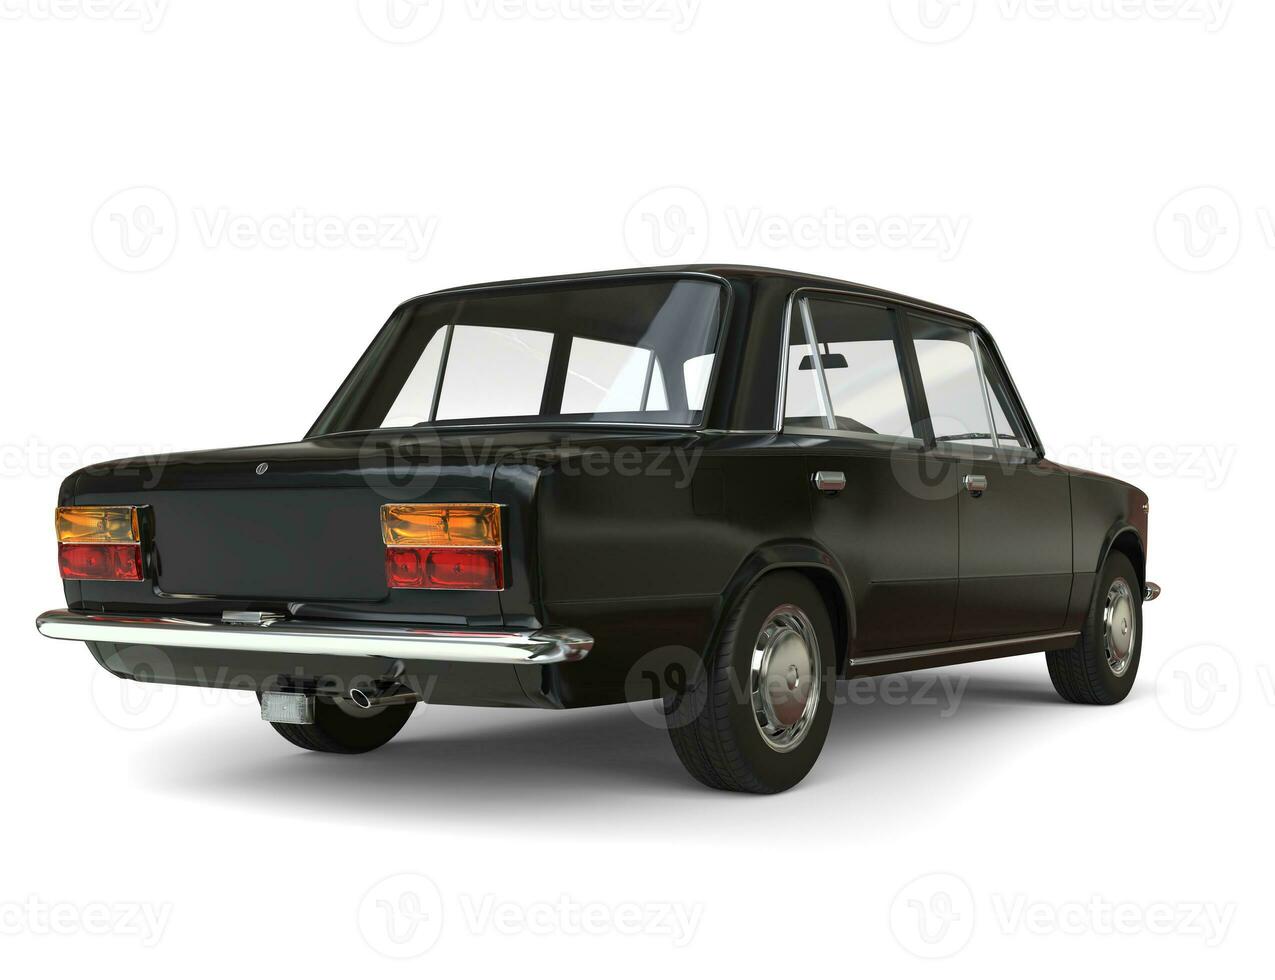 Black vintage eastern european car - back view photo